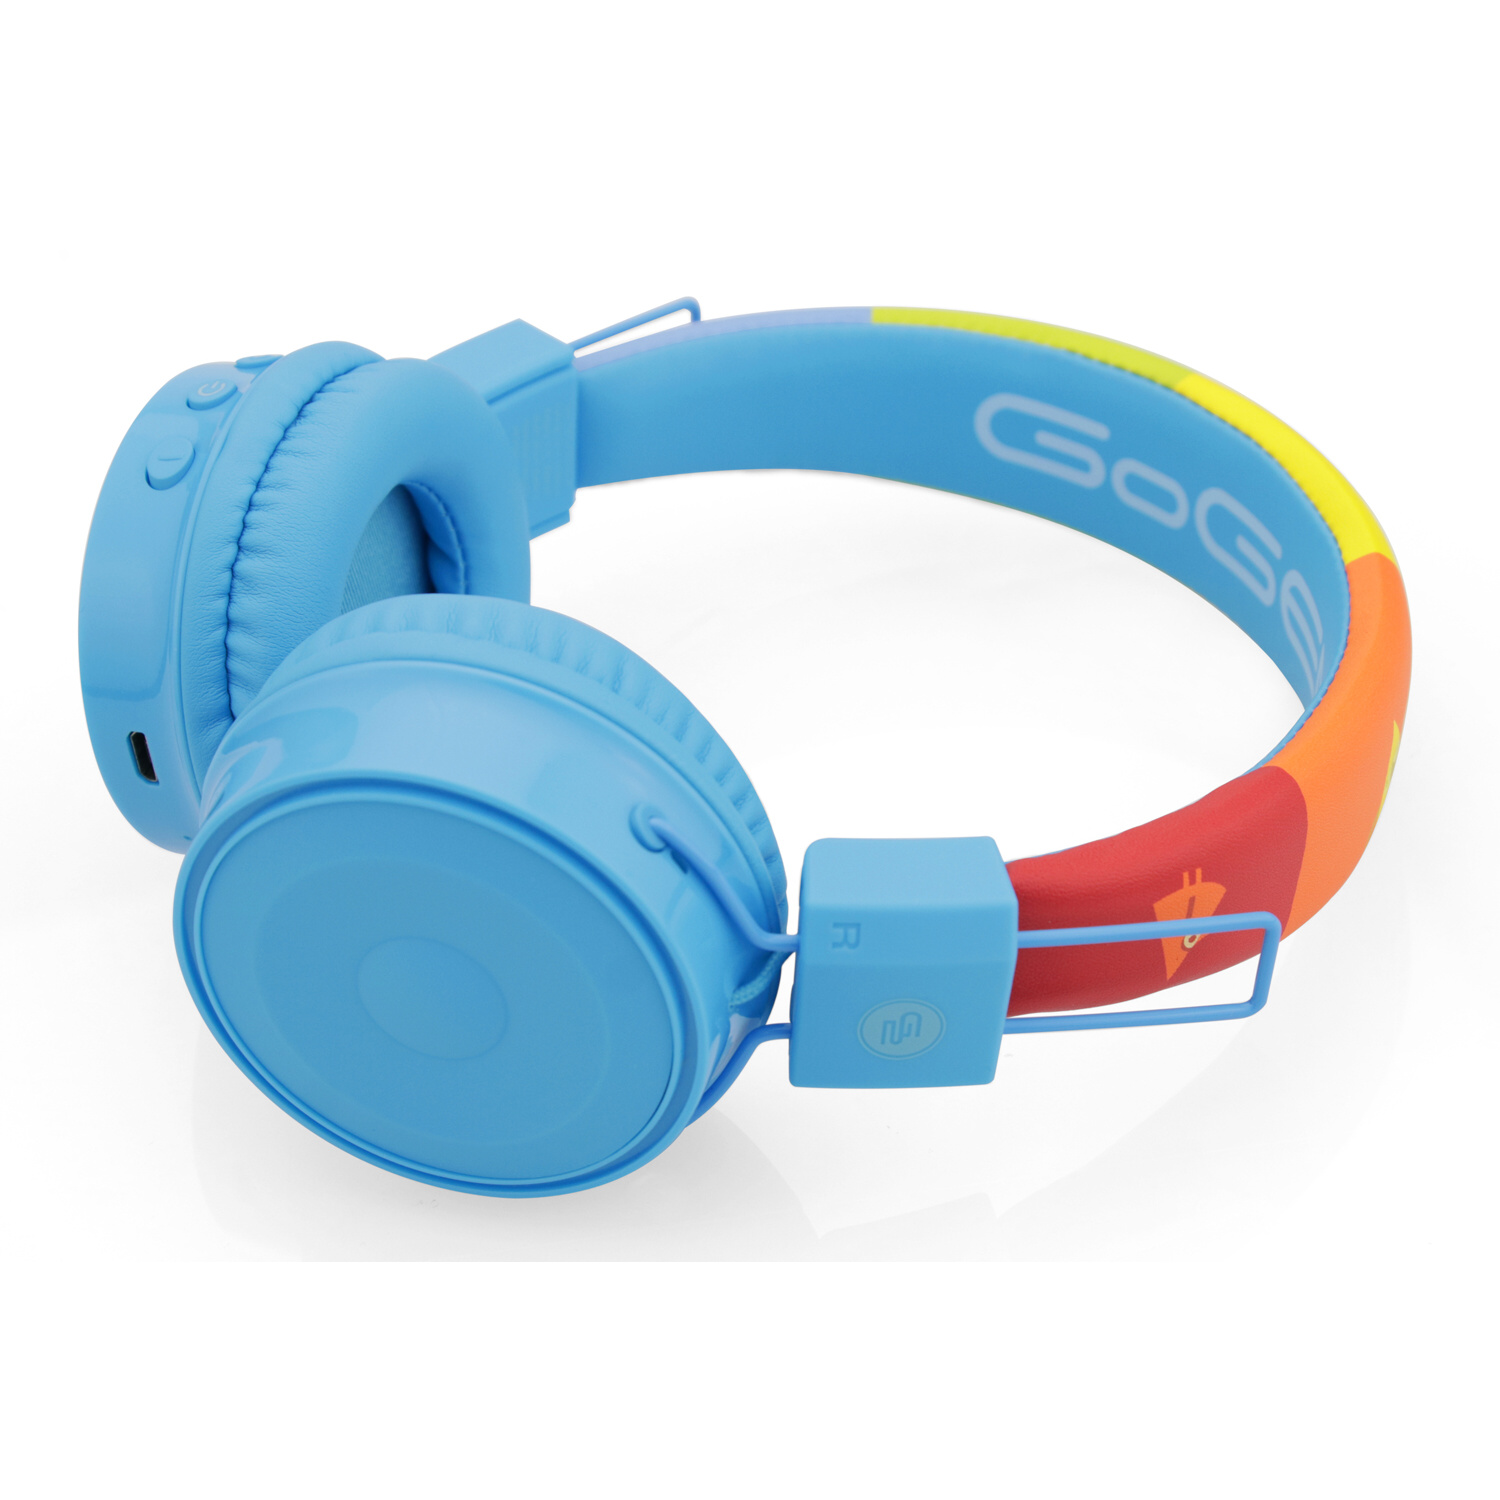 Over-ear GOGEN Bluetooth DECKO SLECHY Blau B, Kopfhörer